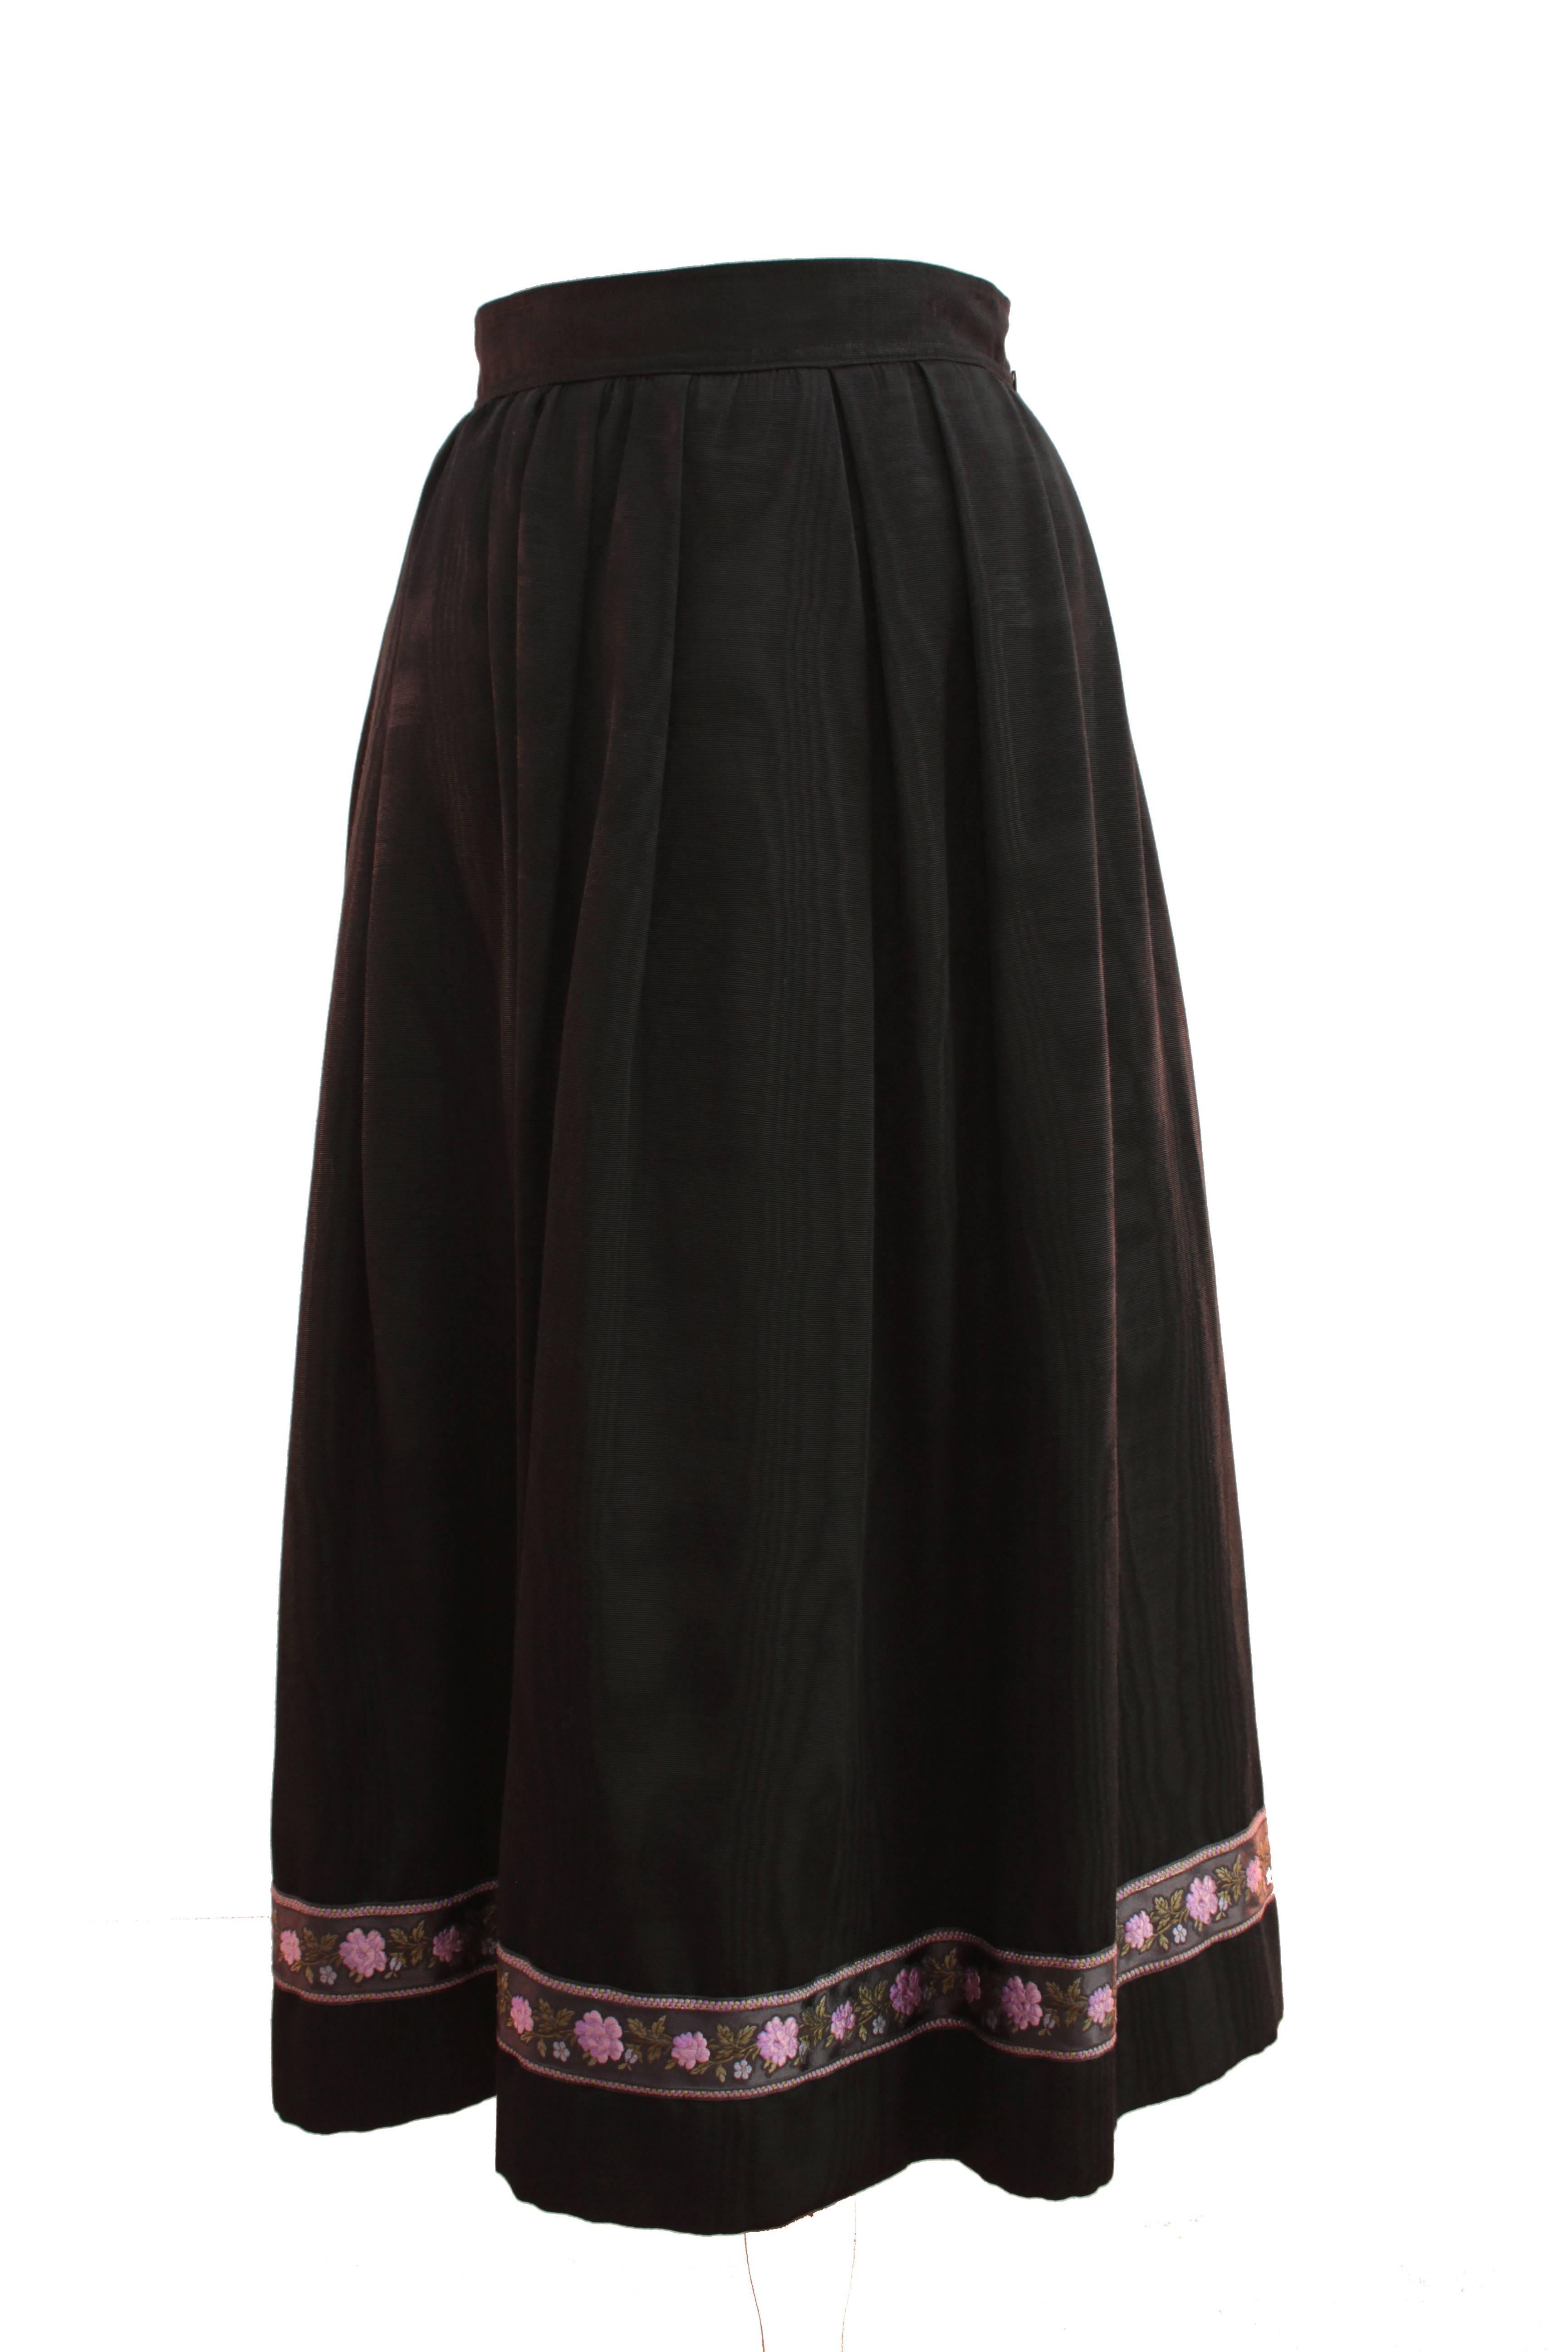 saint laurent brown embroidered skirt